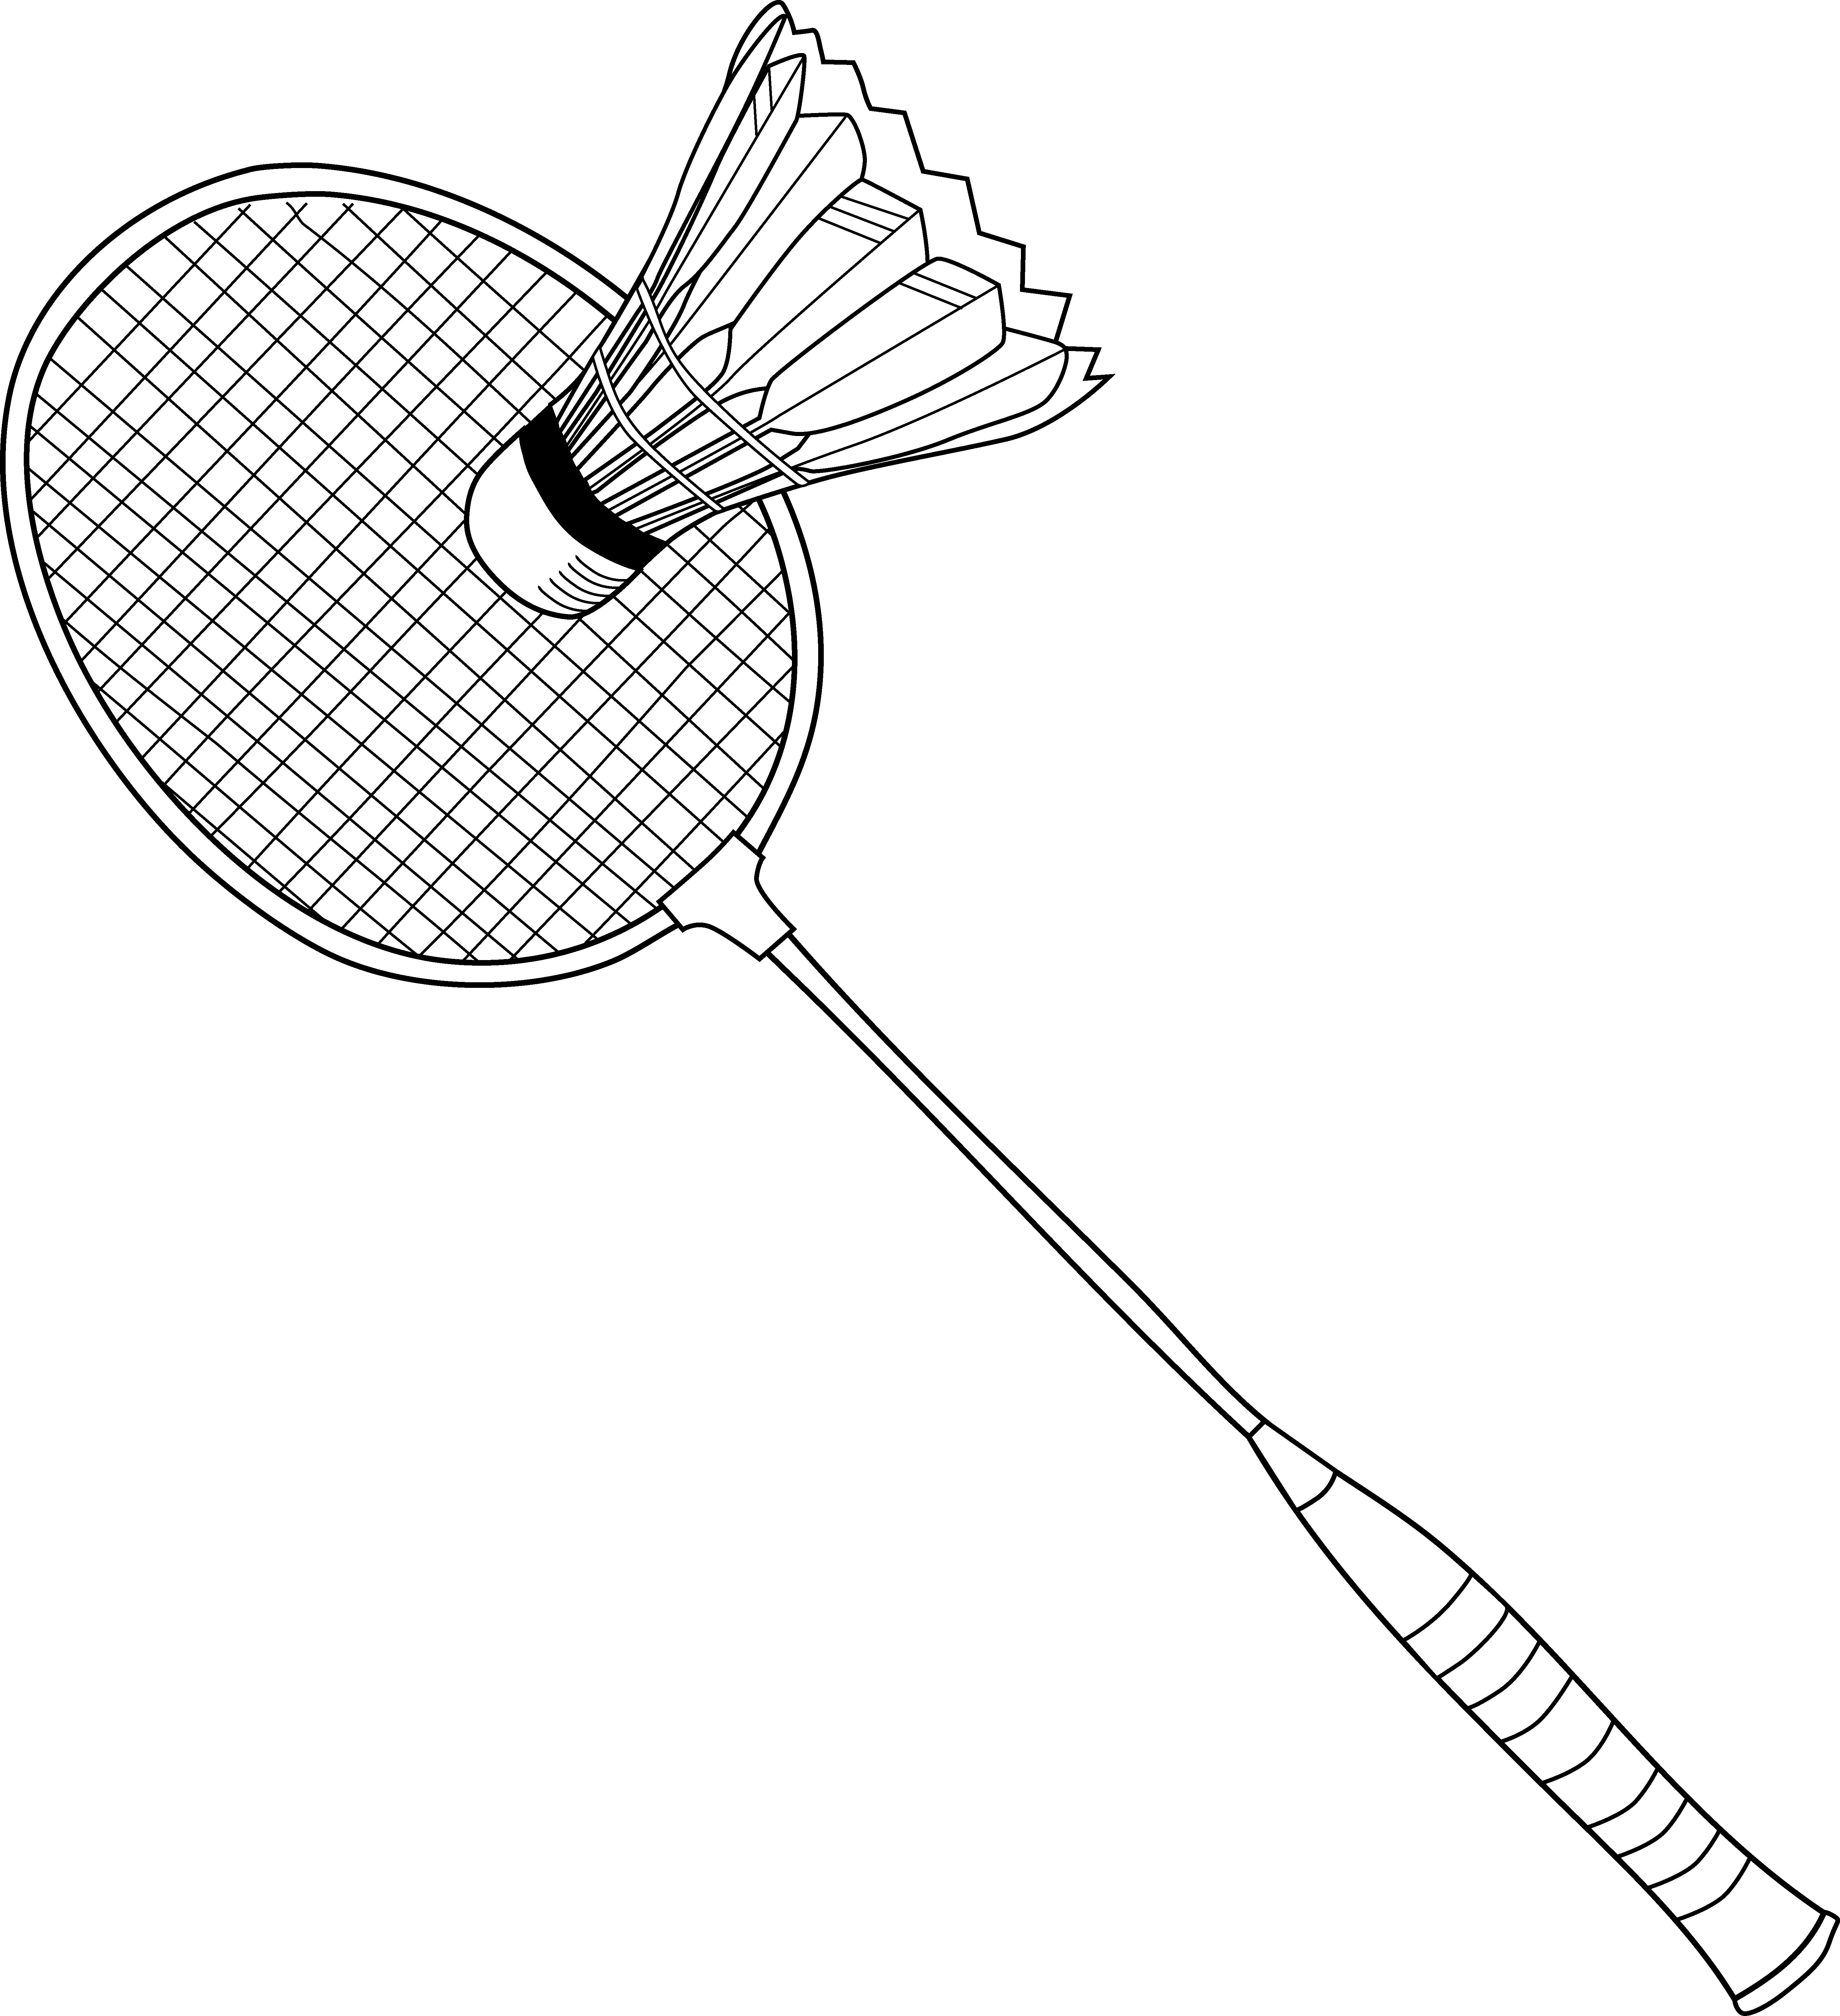 clipart woman badminton